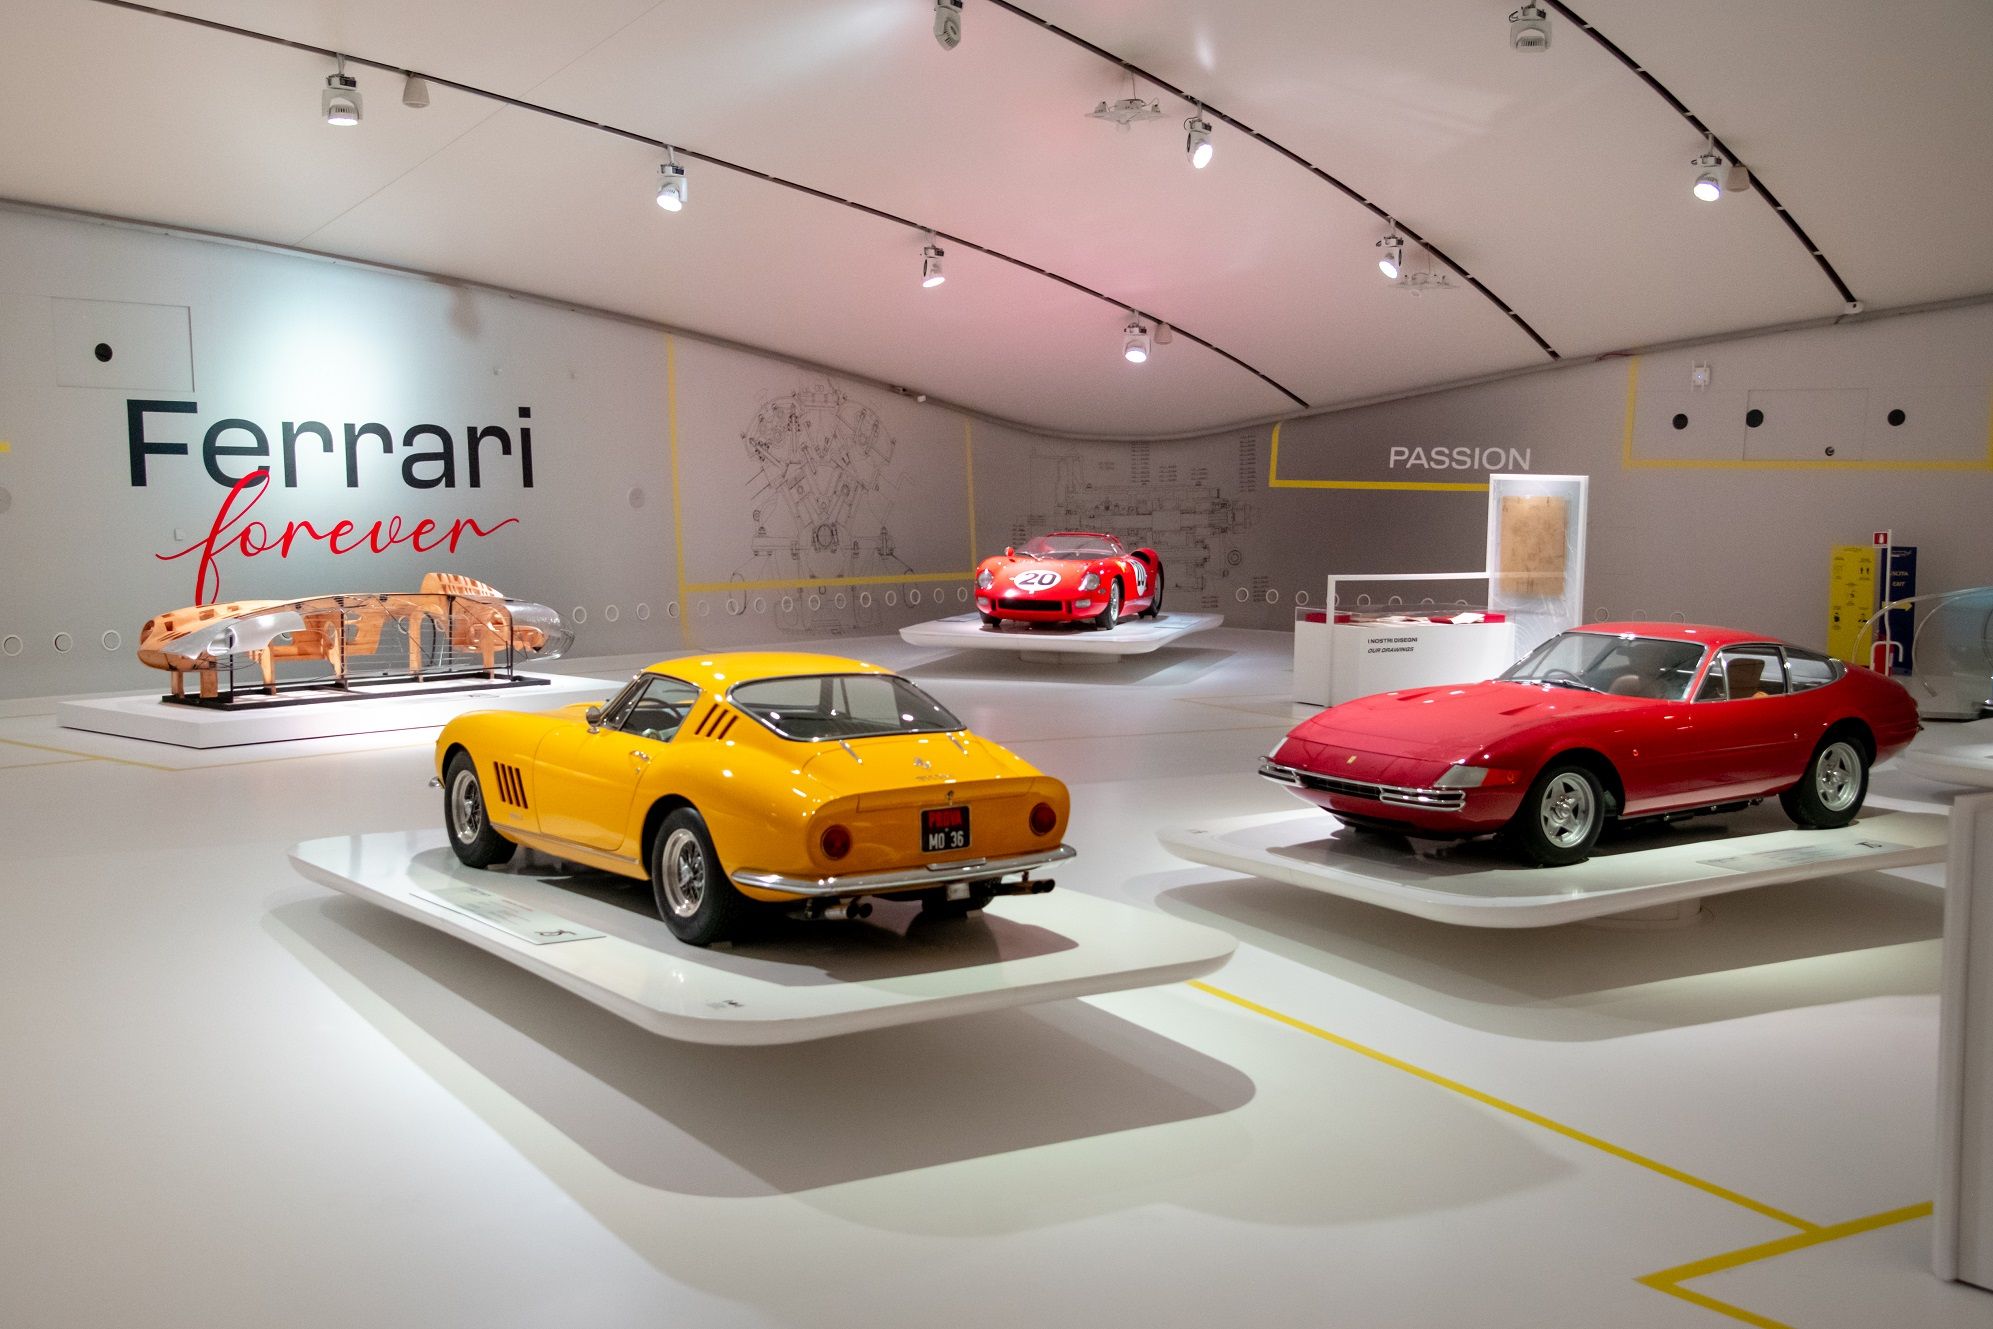 Ferrari Forever_Supercar Exhibition_04